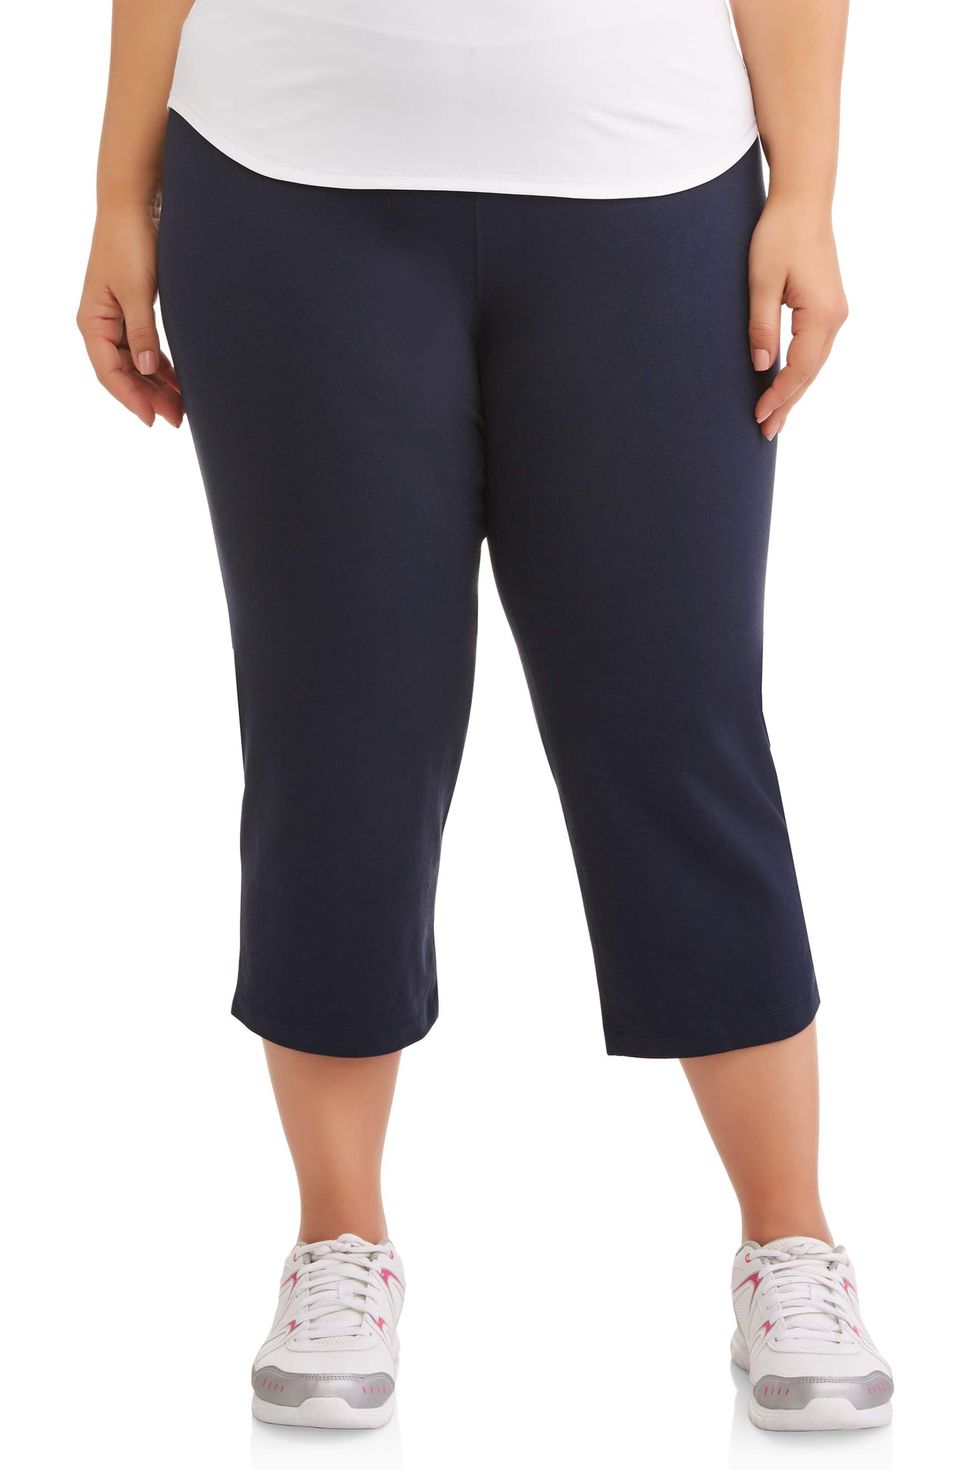 Buy Brand Flex Women's Big Size Capri Pant, Women Plus Size Yoga